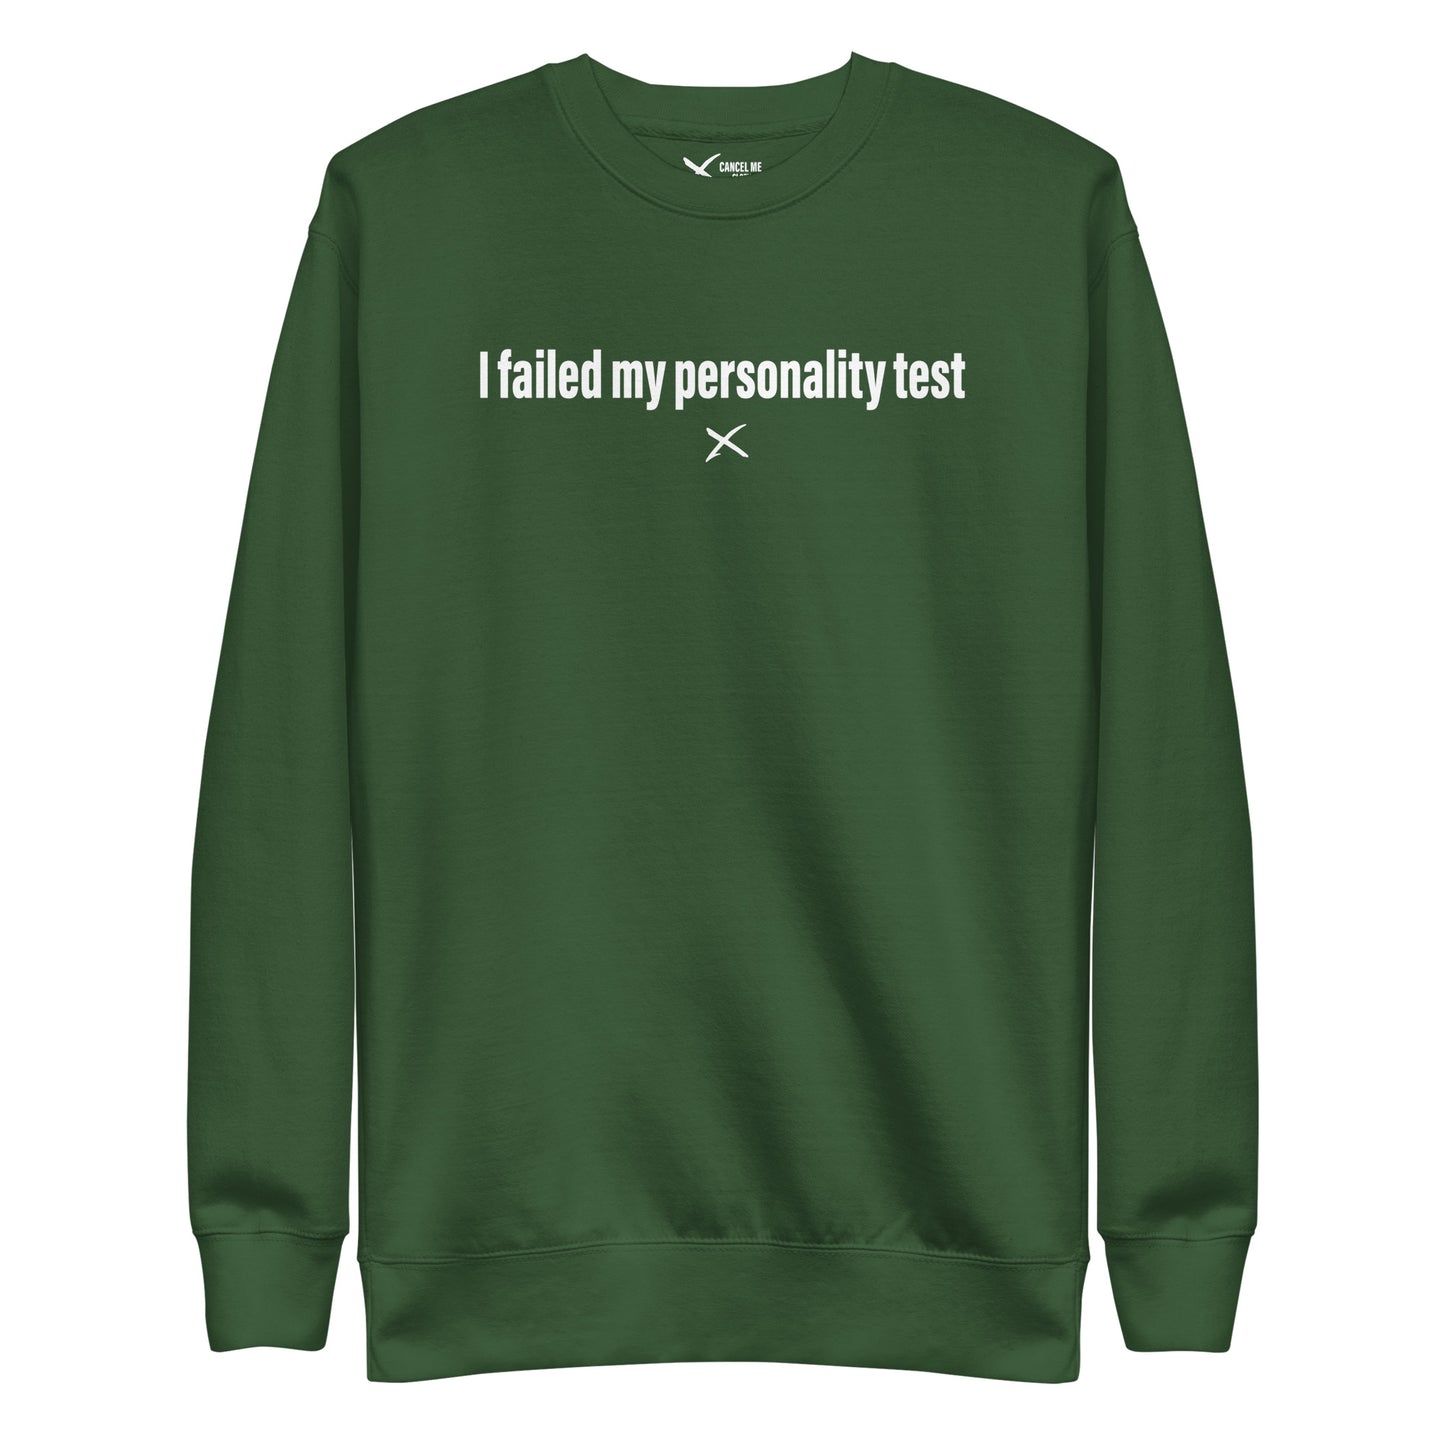 I failed my personality test - Sweatshirt